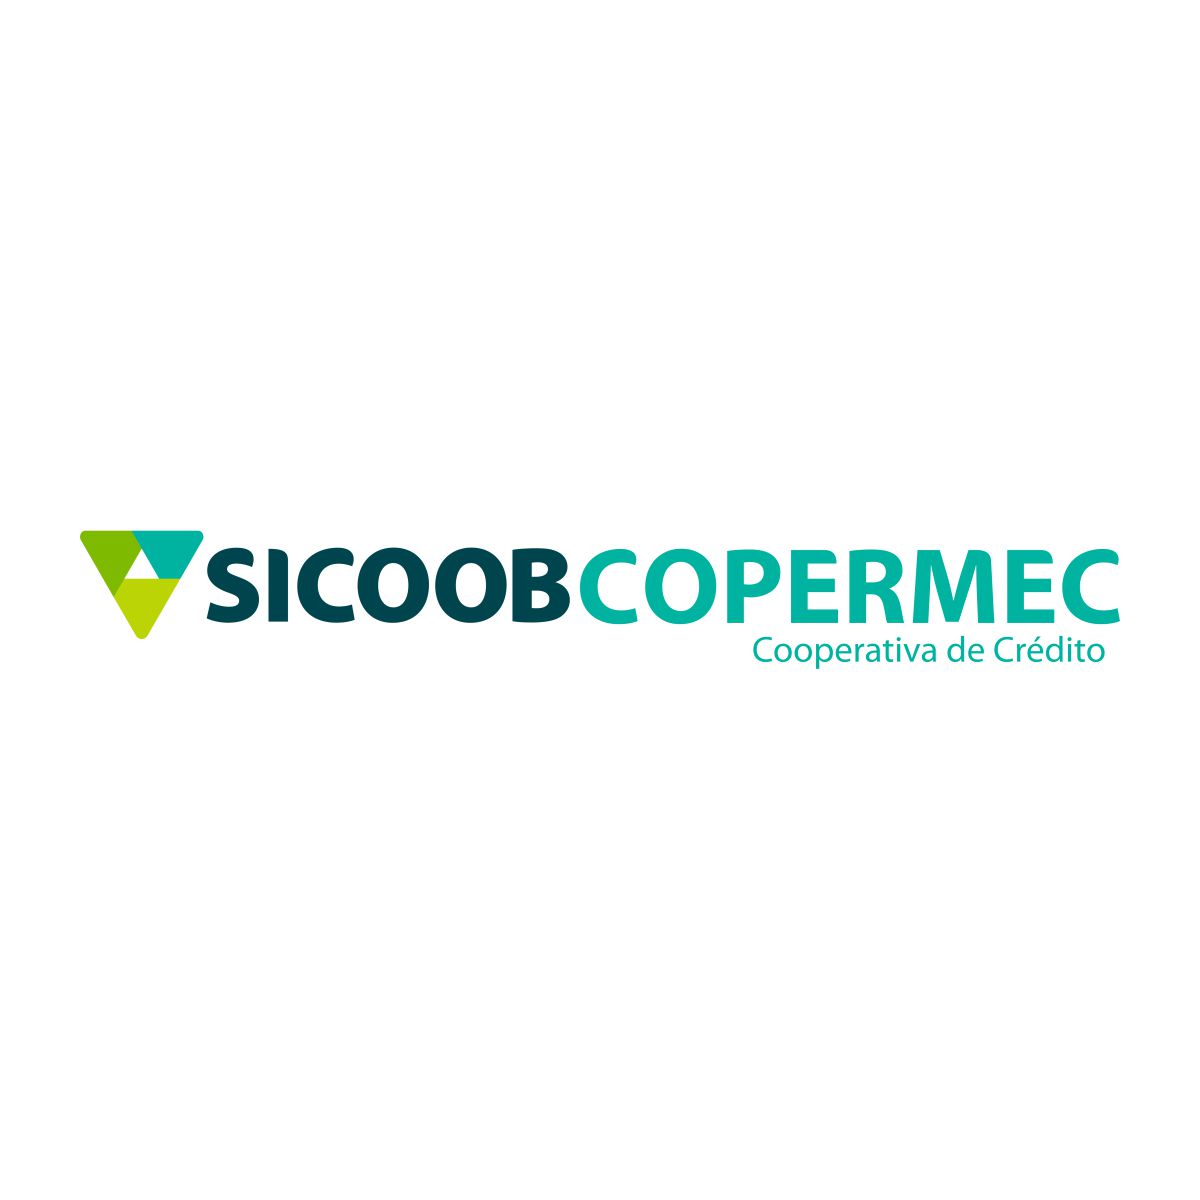 Sicoob Copermec